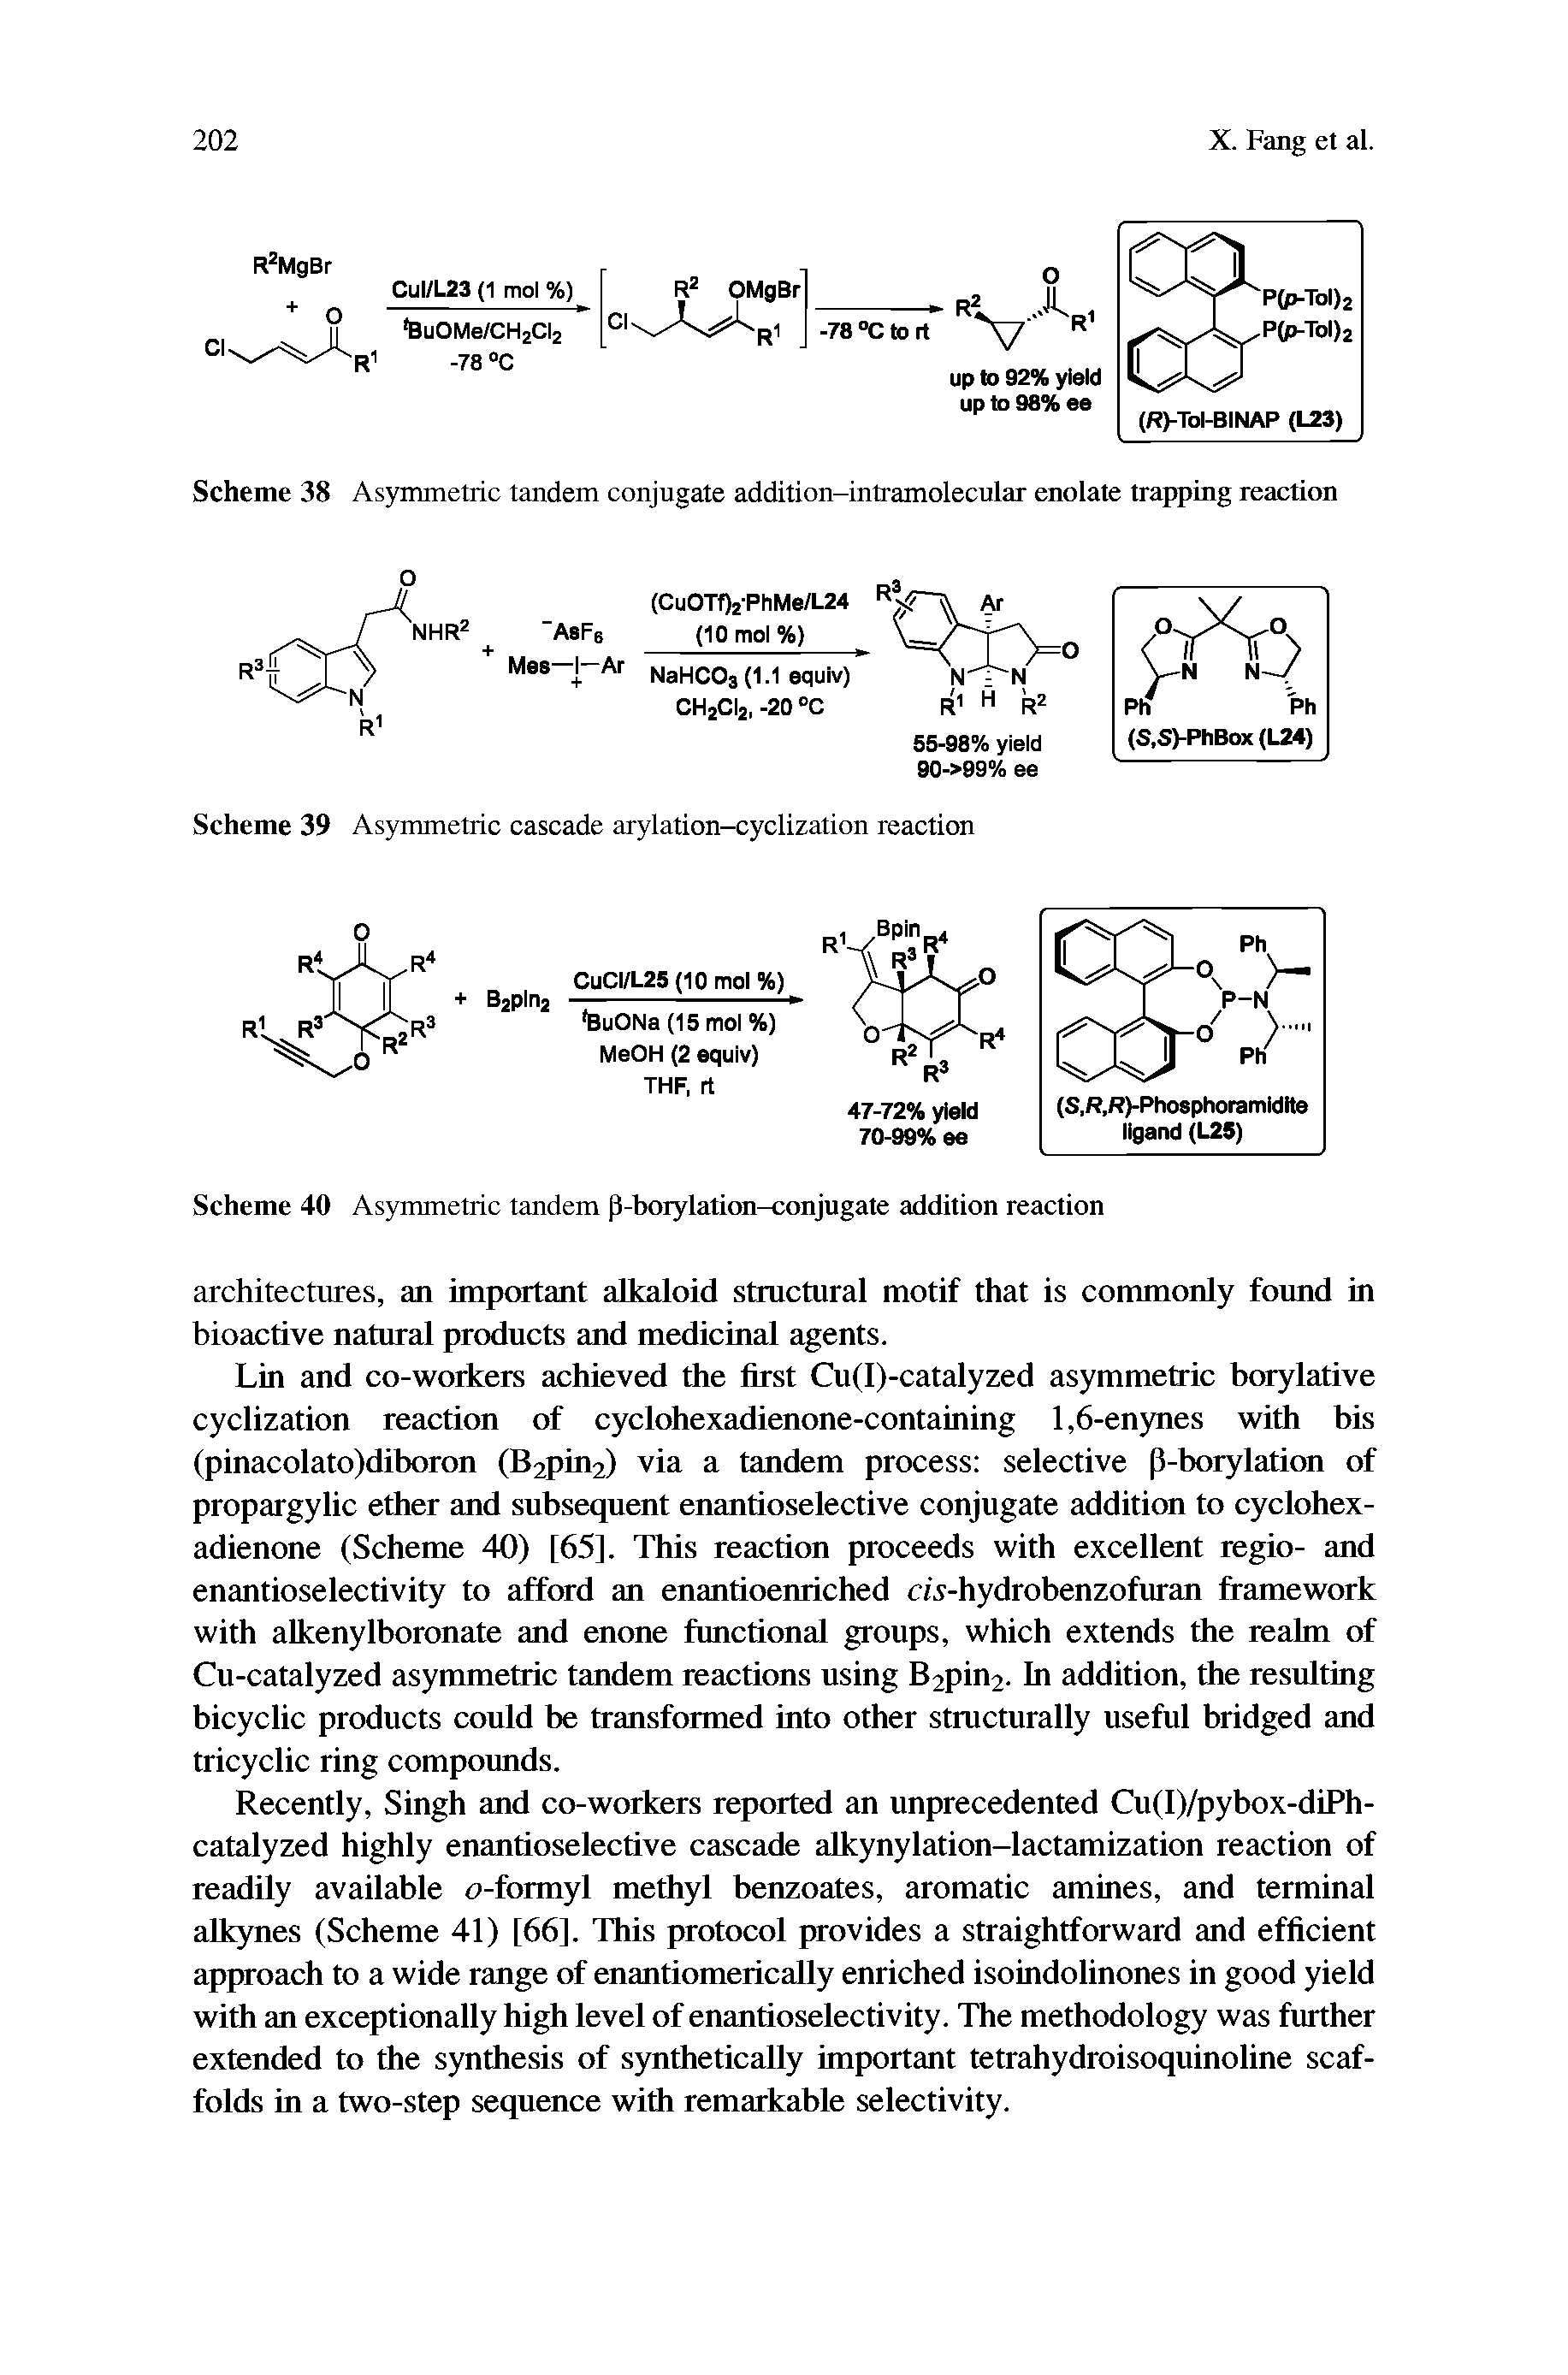 Scheme 40 Asymmetric tandem p-borylation-conjugate addition reaction...